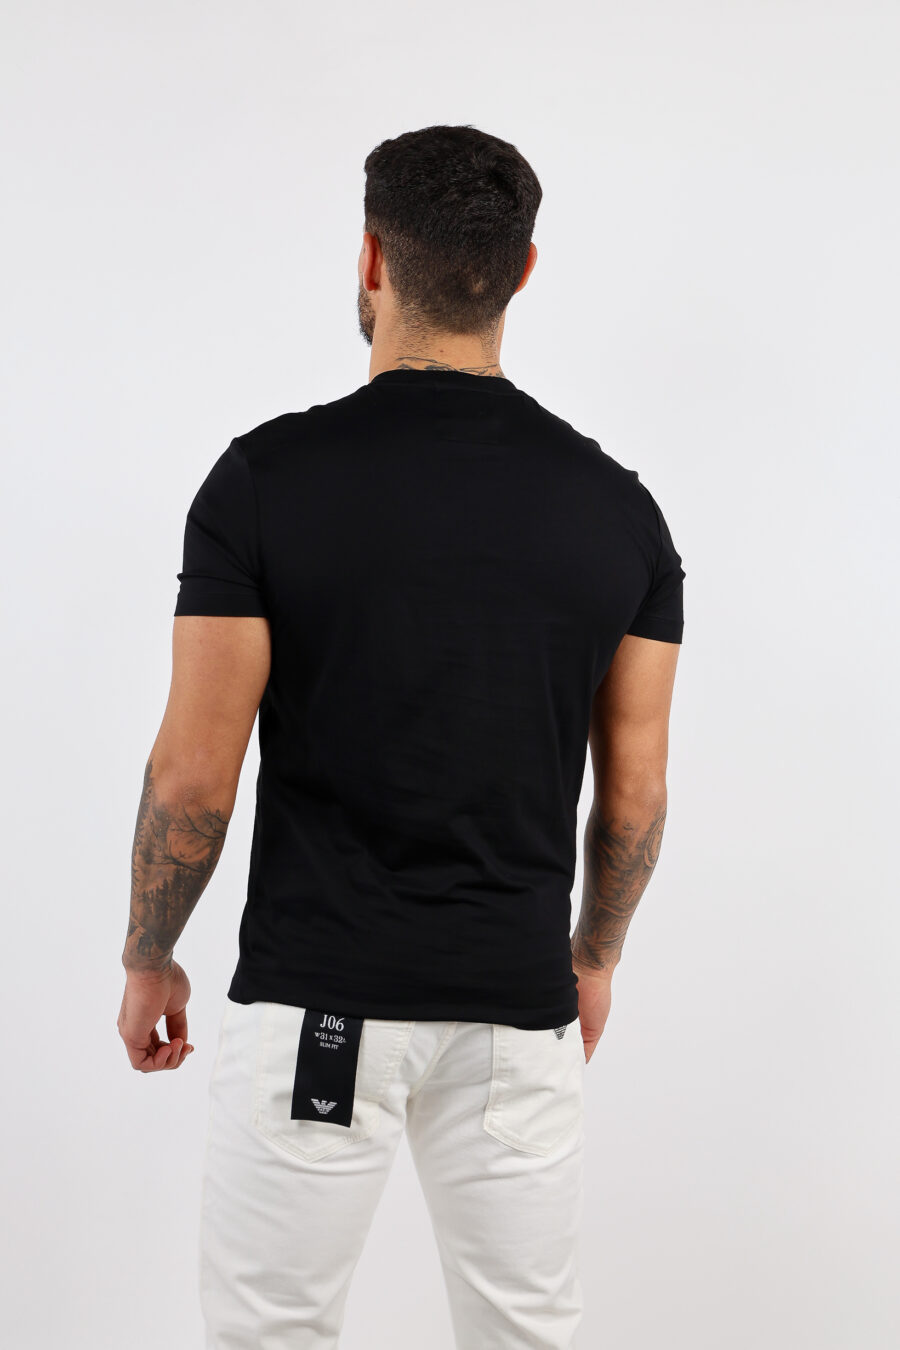 T-shirt noir avec lettrage blanc maxilogo - BLS Fashion 90